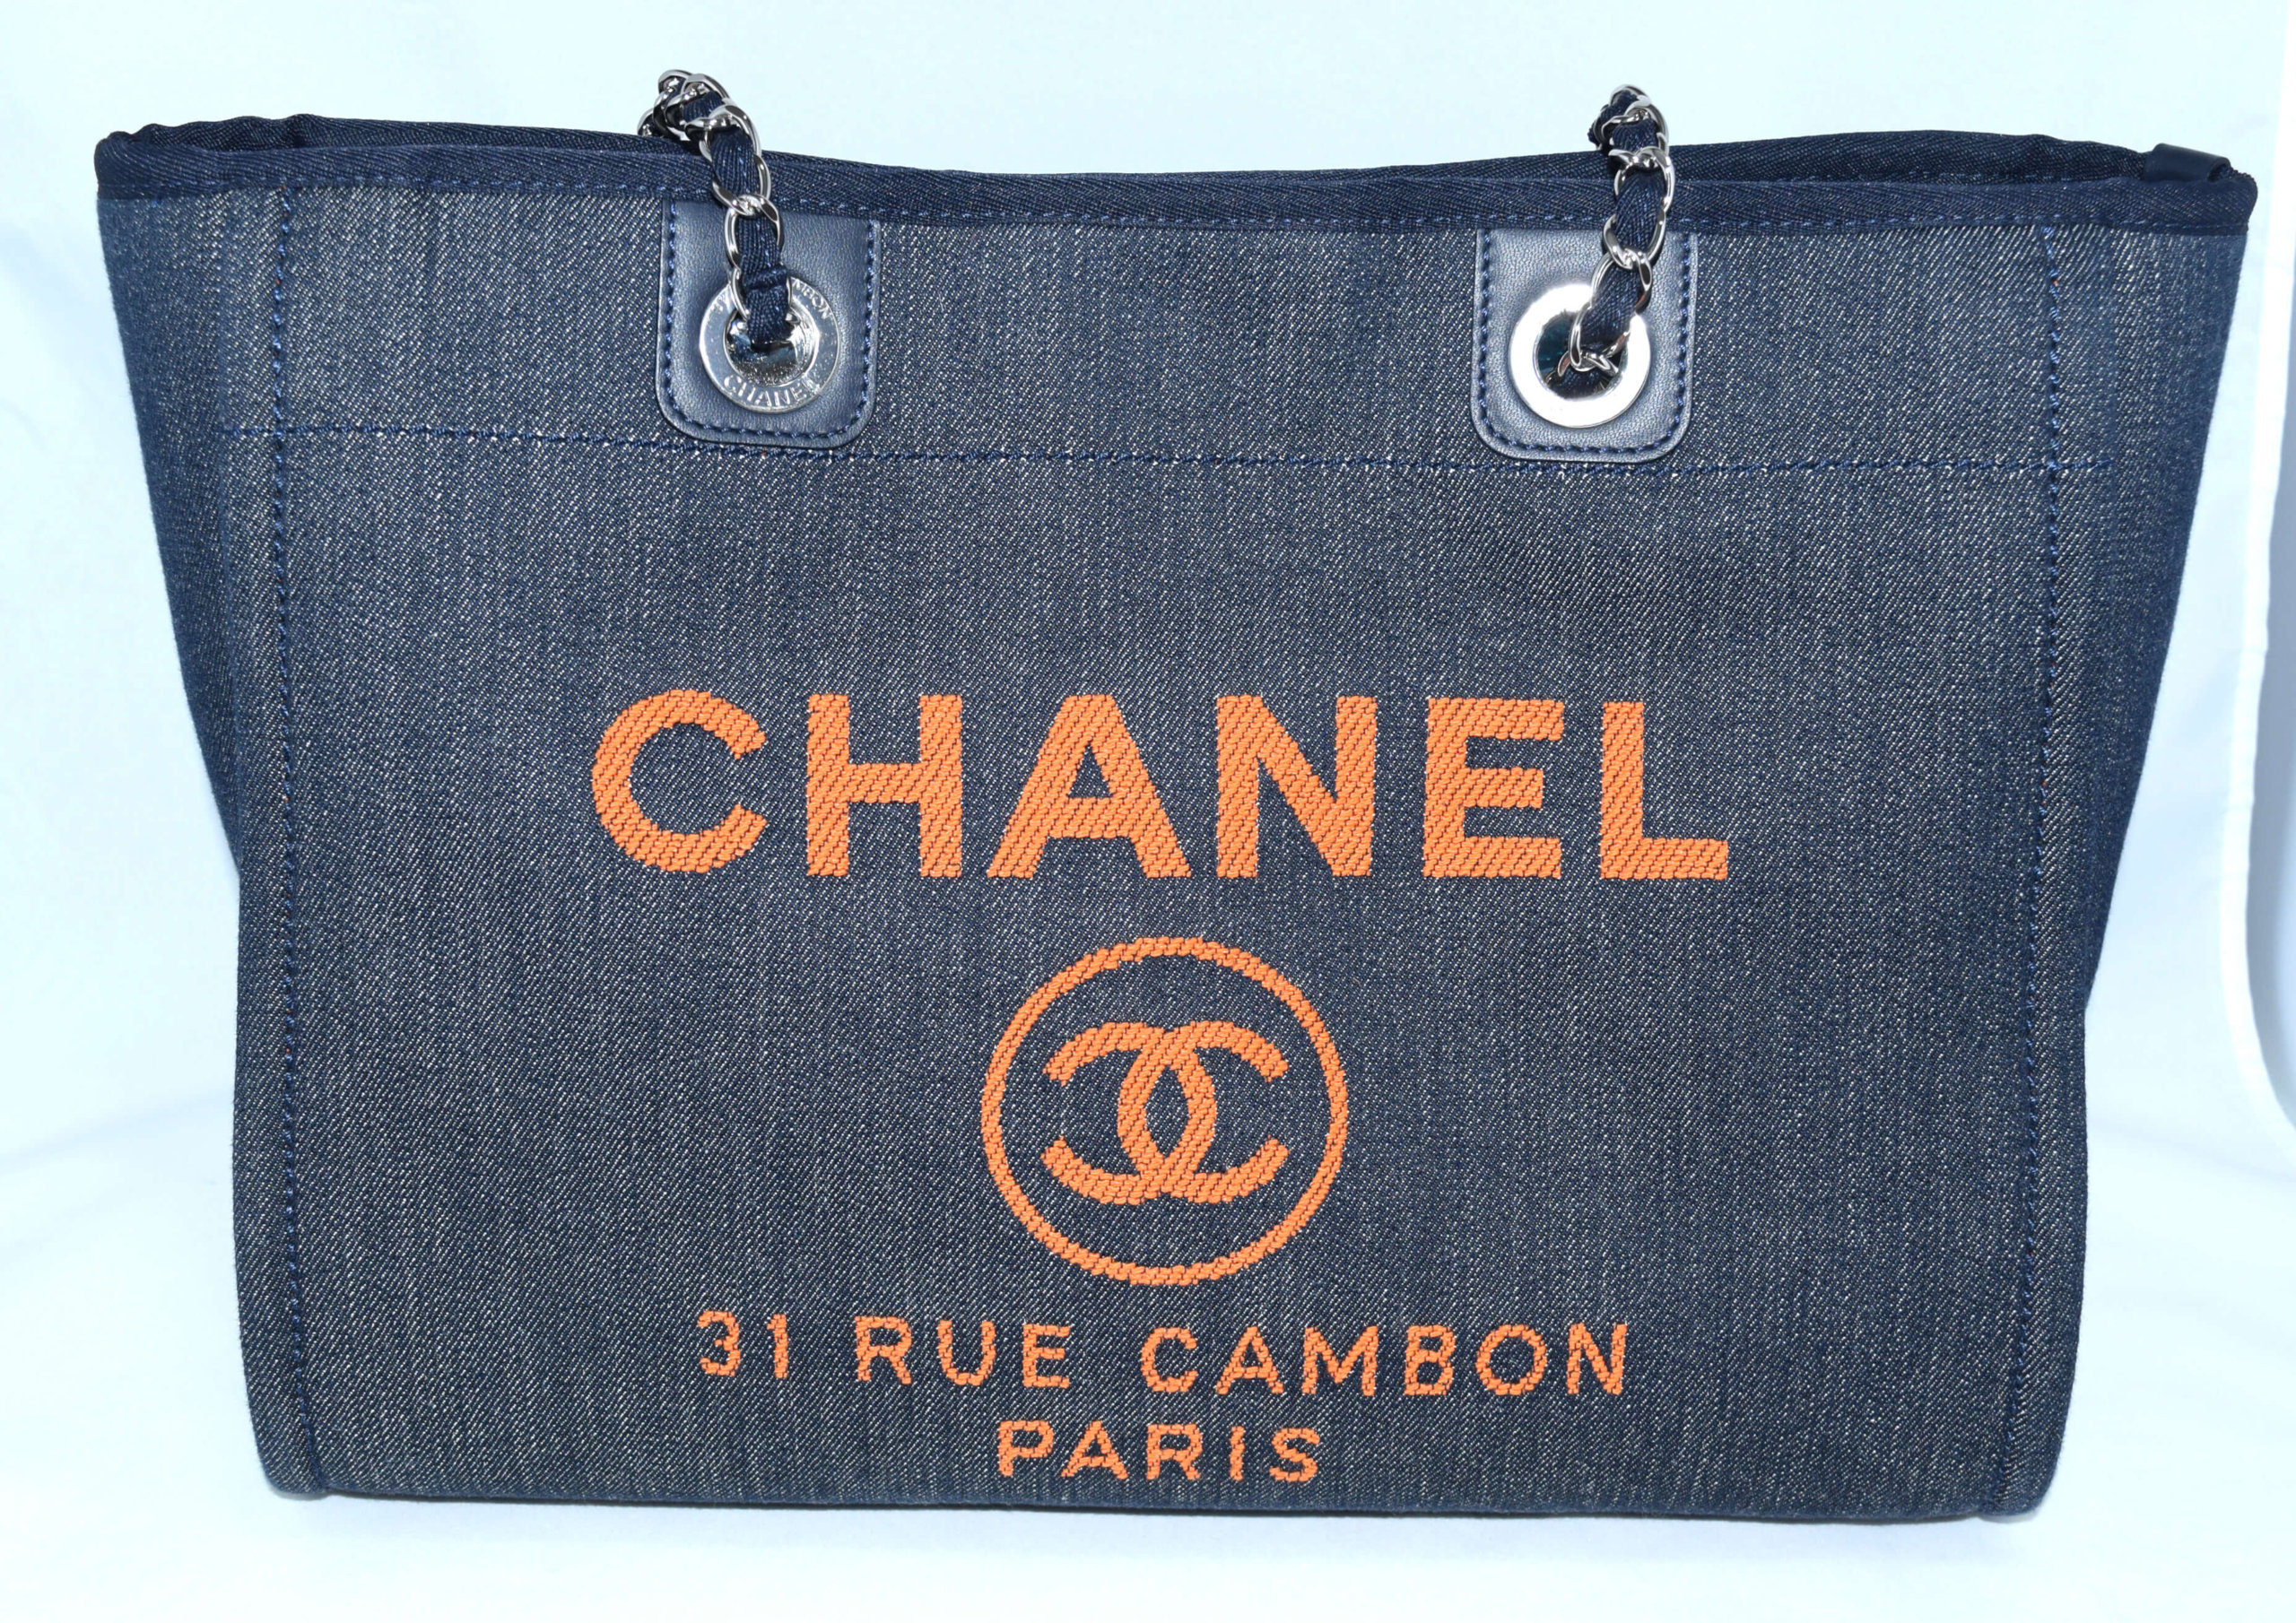 Chanel Canvas Shoulder Bags